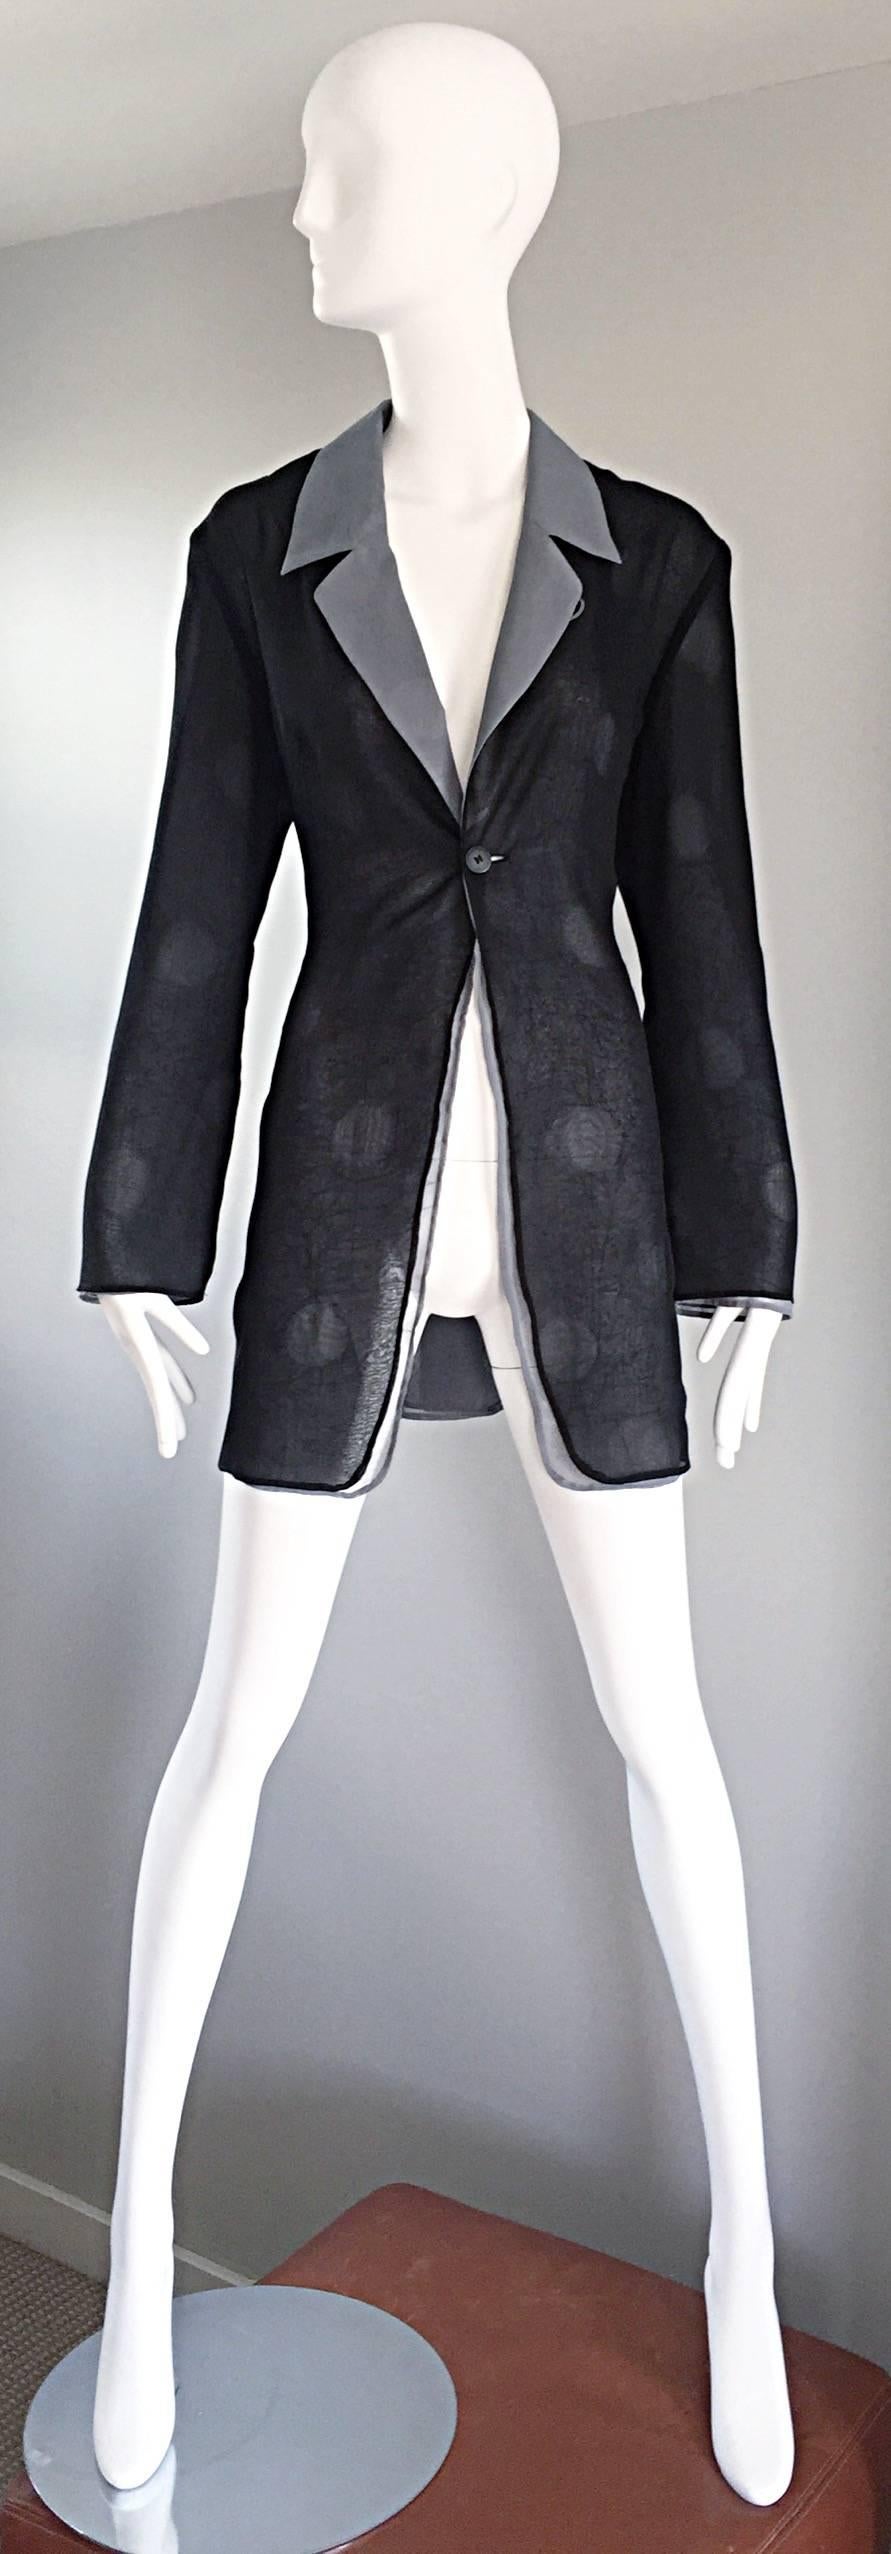 Vintage Matsuda Black and Grey Chiffon Polka Dot Chiffon Avant Garde 90s Jacket  For Sale 3